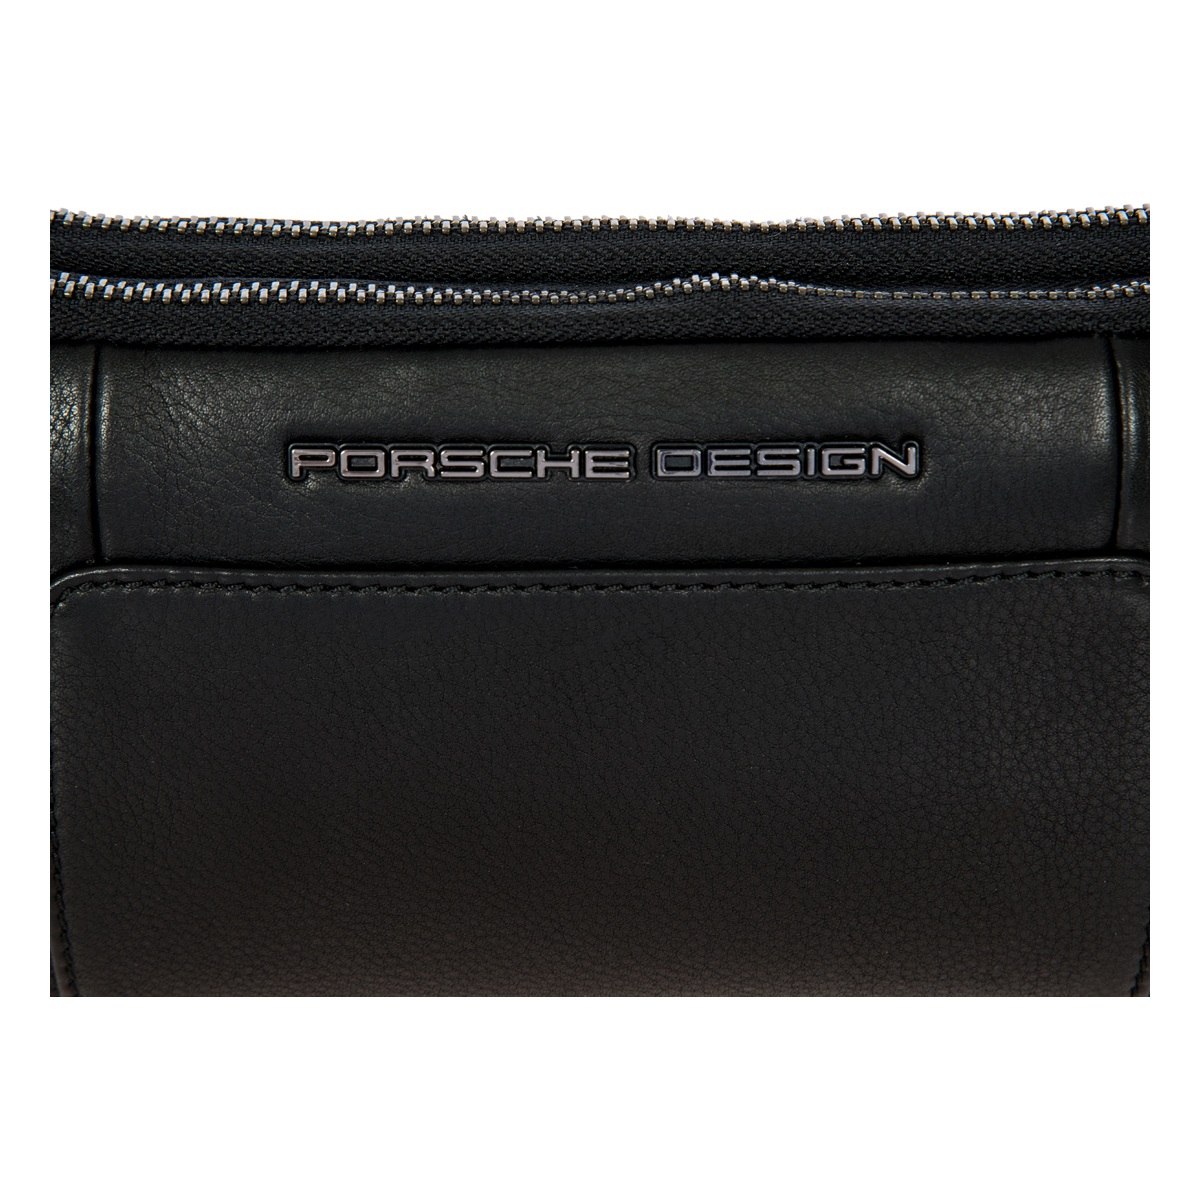 Porsche Design - Roadster Leather - Travel Pouch